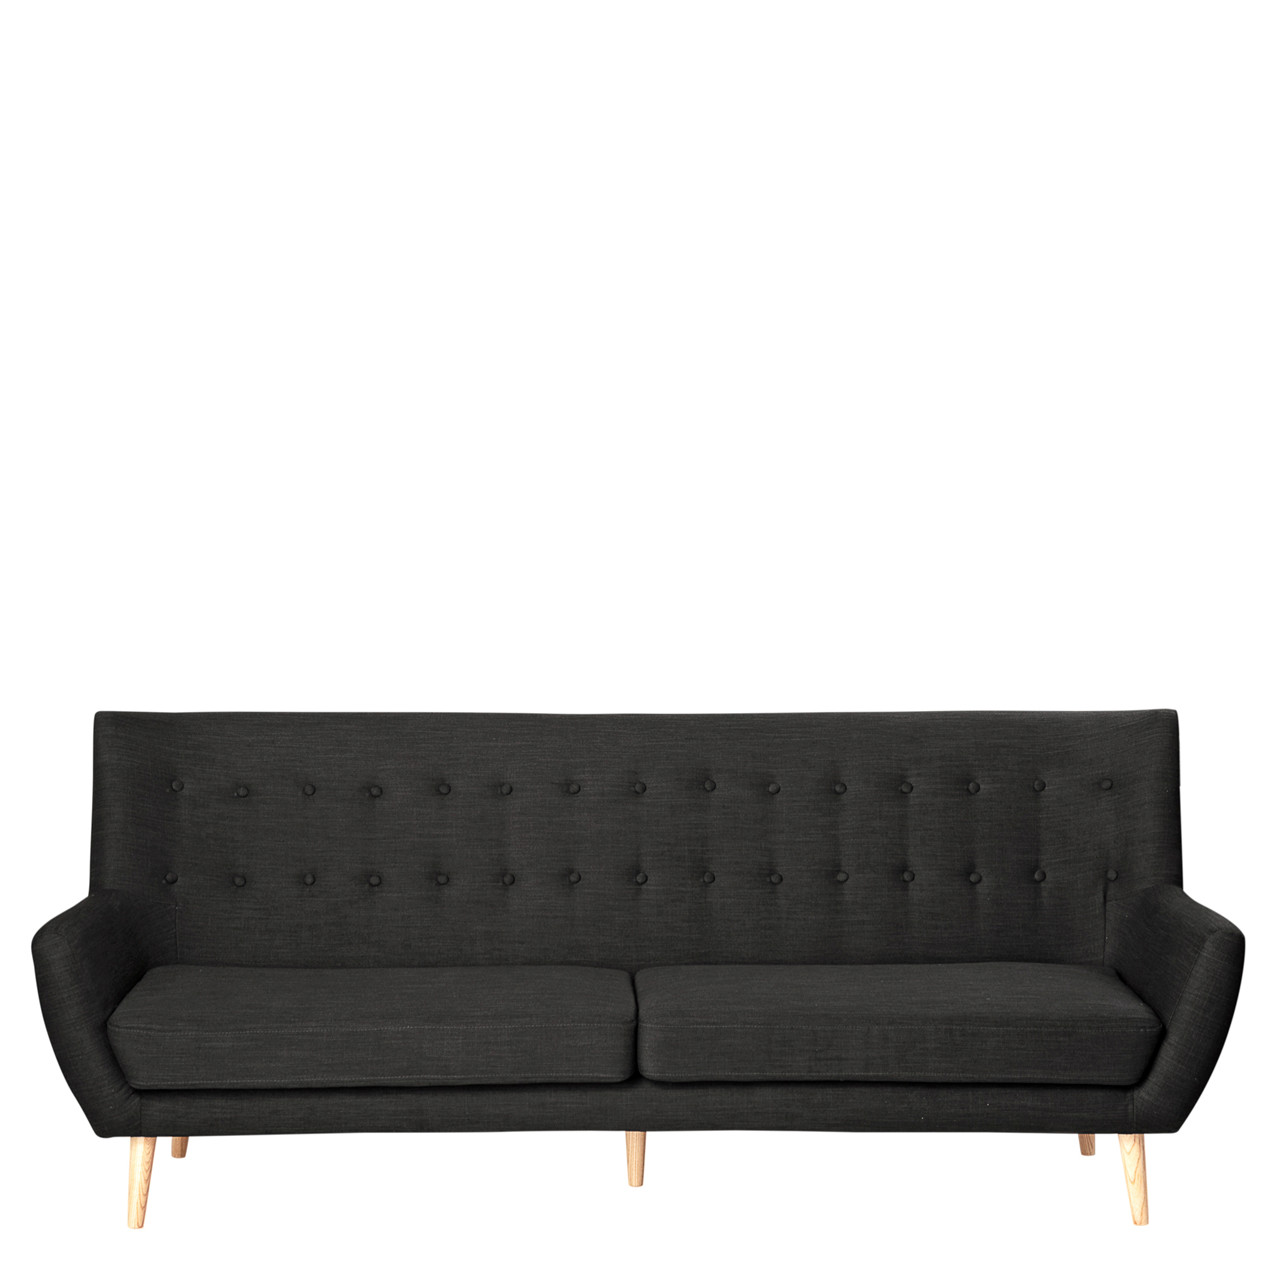 MIAMI XL sofa sort // Forventes på lager til vinter